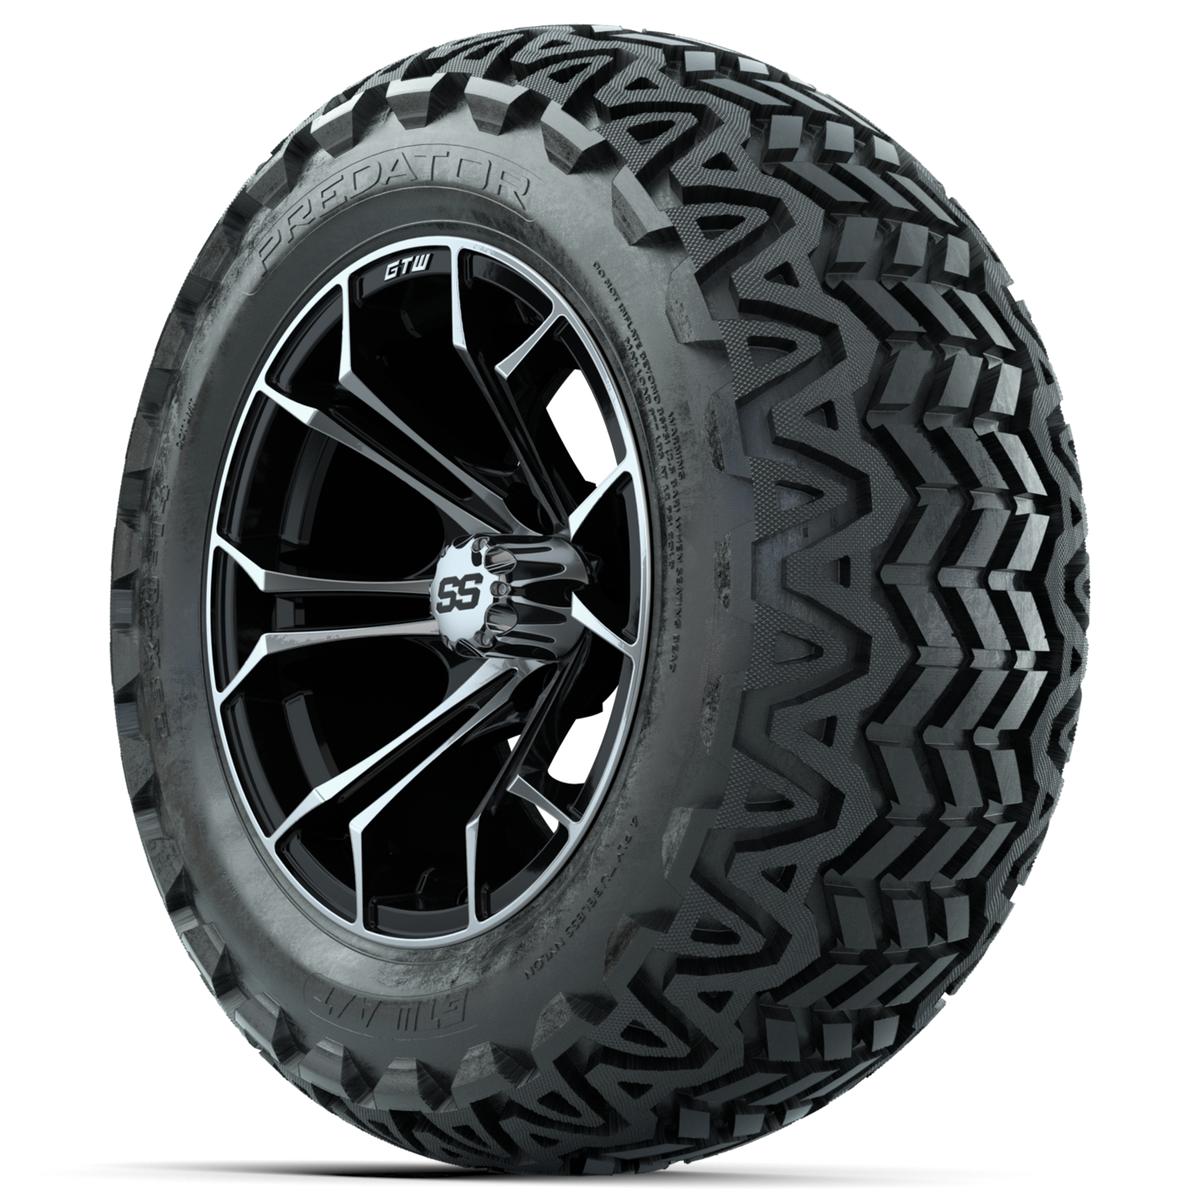 GTW Spyder Machined/Black 14 in Wheels with 23x10-14 GTW Predator All-Terrain Tires – Full Set